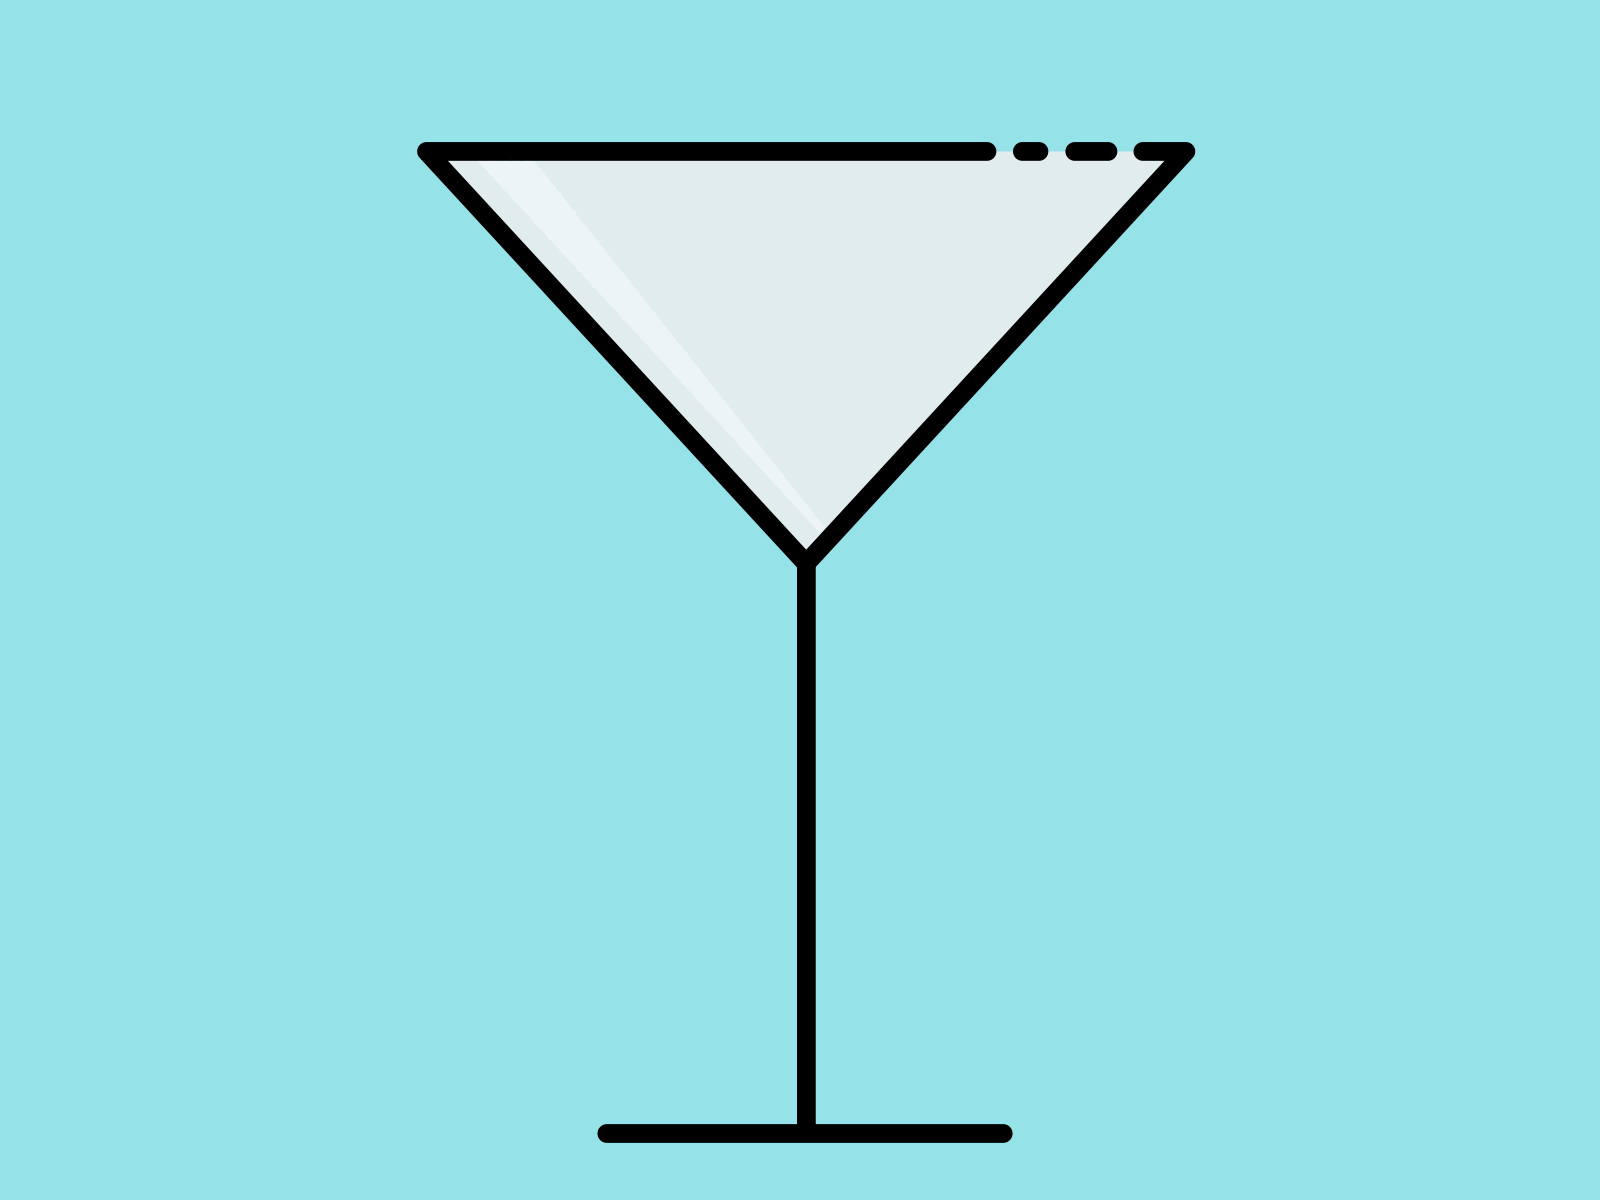 Martini Lottie Animation with Ice